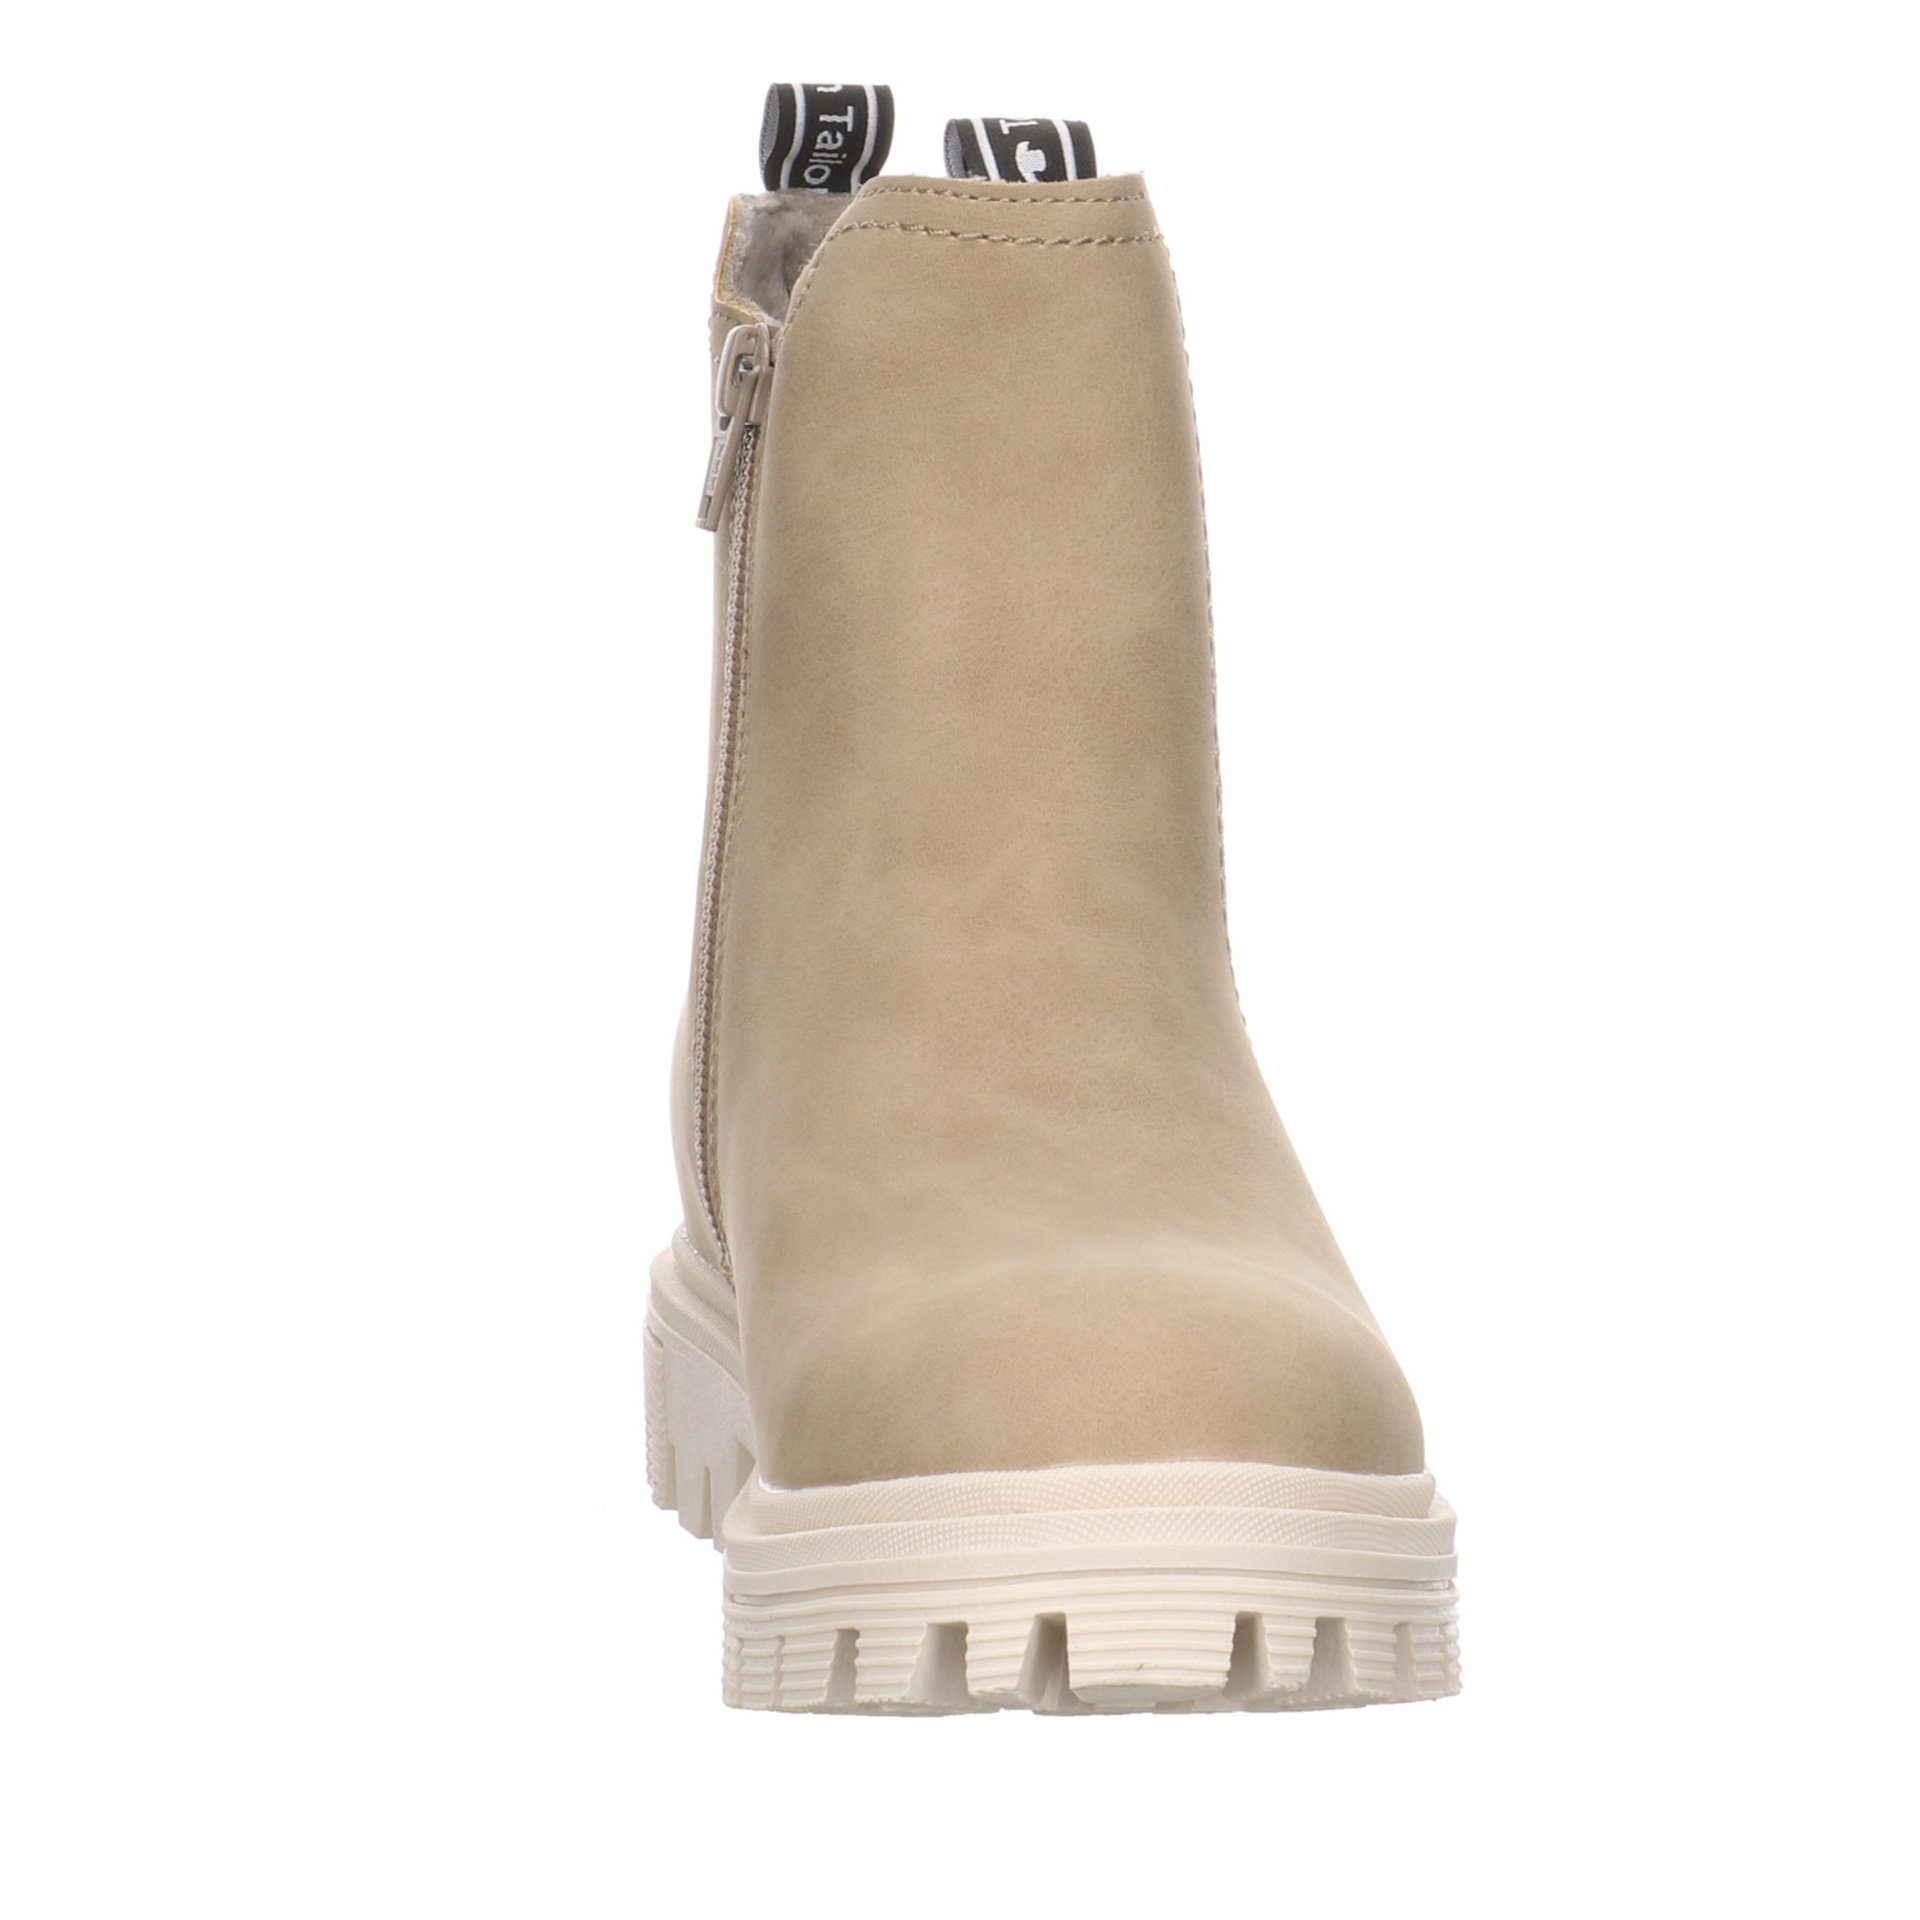 TAILOR Mädchen Chelsea Boots Kinderschuhe Stiefel Synthetik TOM beige Stiefelette Schuhe